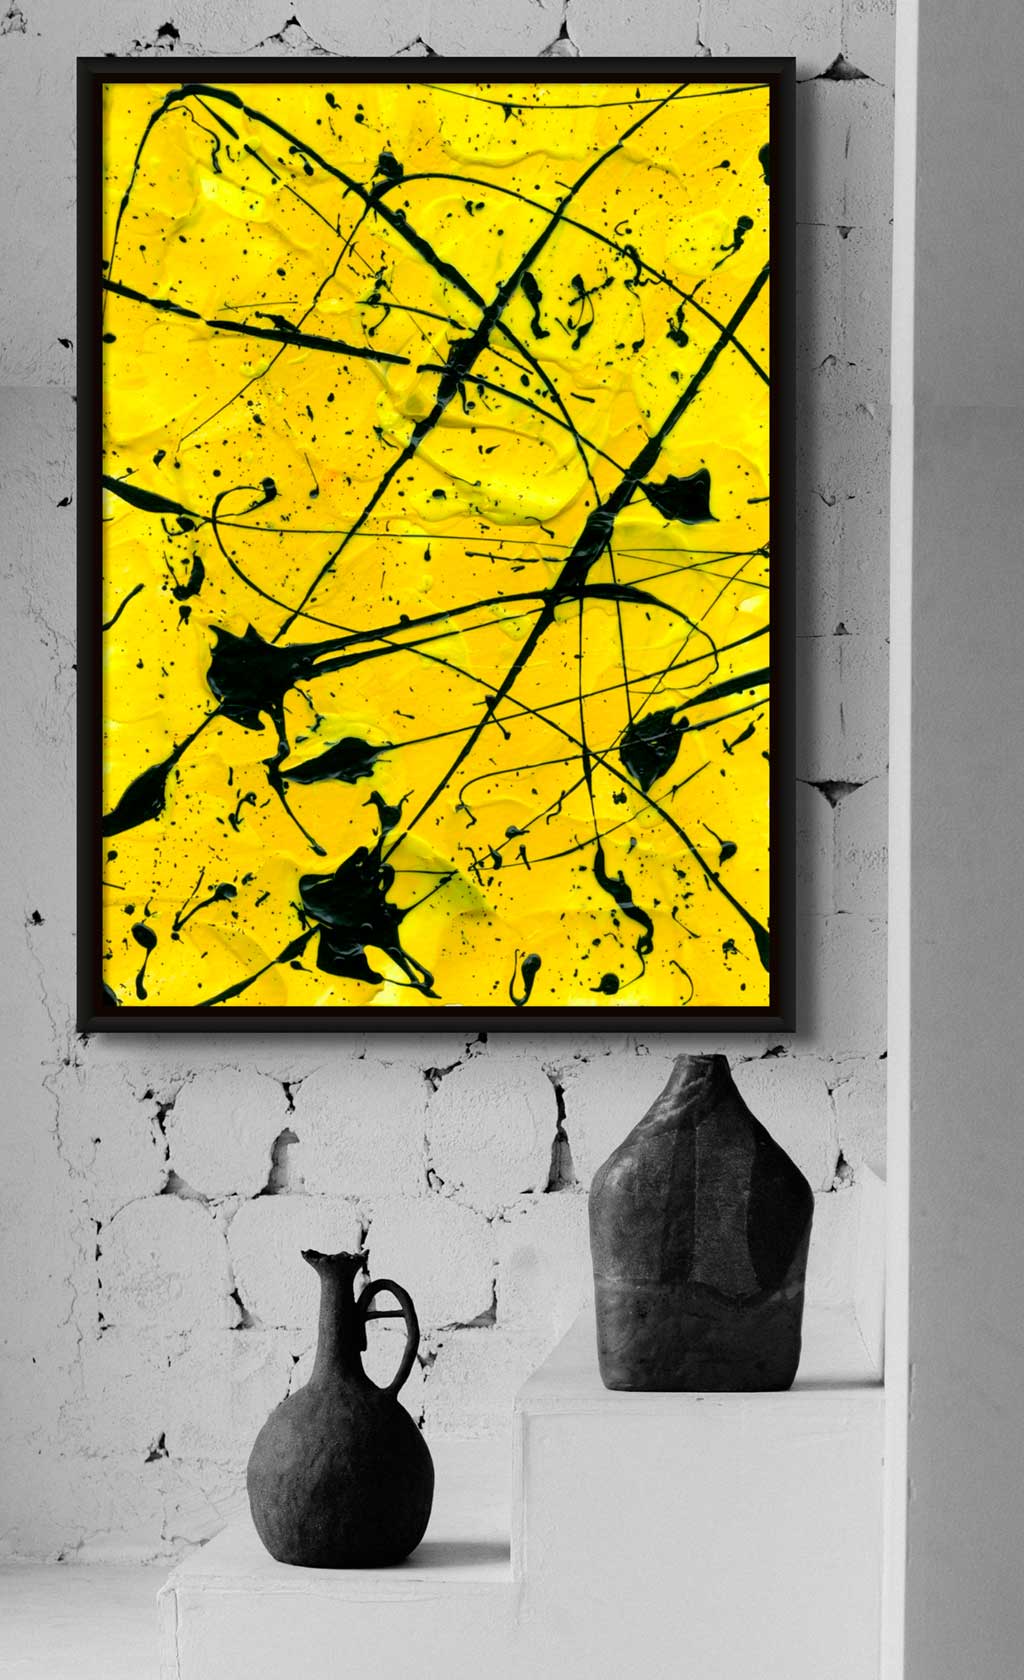 Geometric II fine art canvas print seen in black float frame on brick wall above black vases. After original abstract artwork by Bridget Bradley